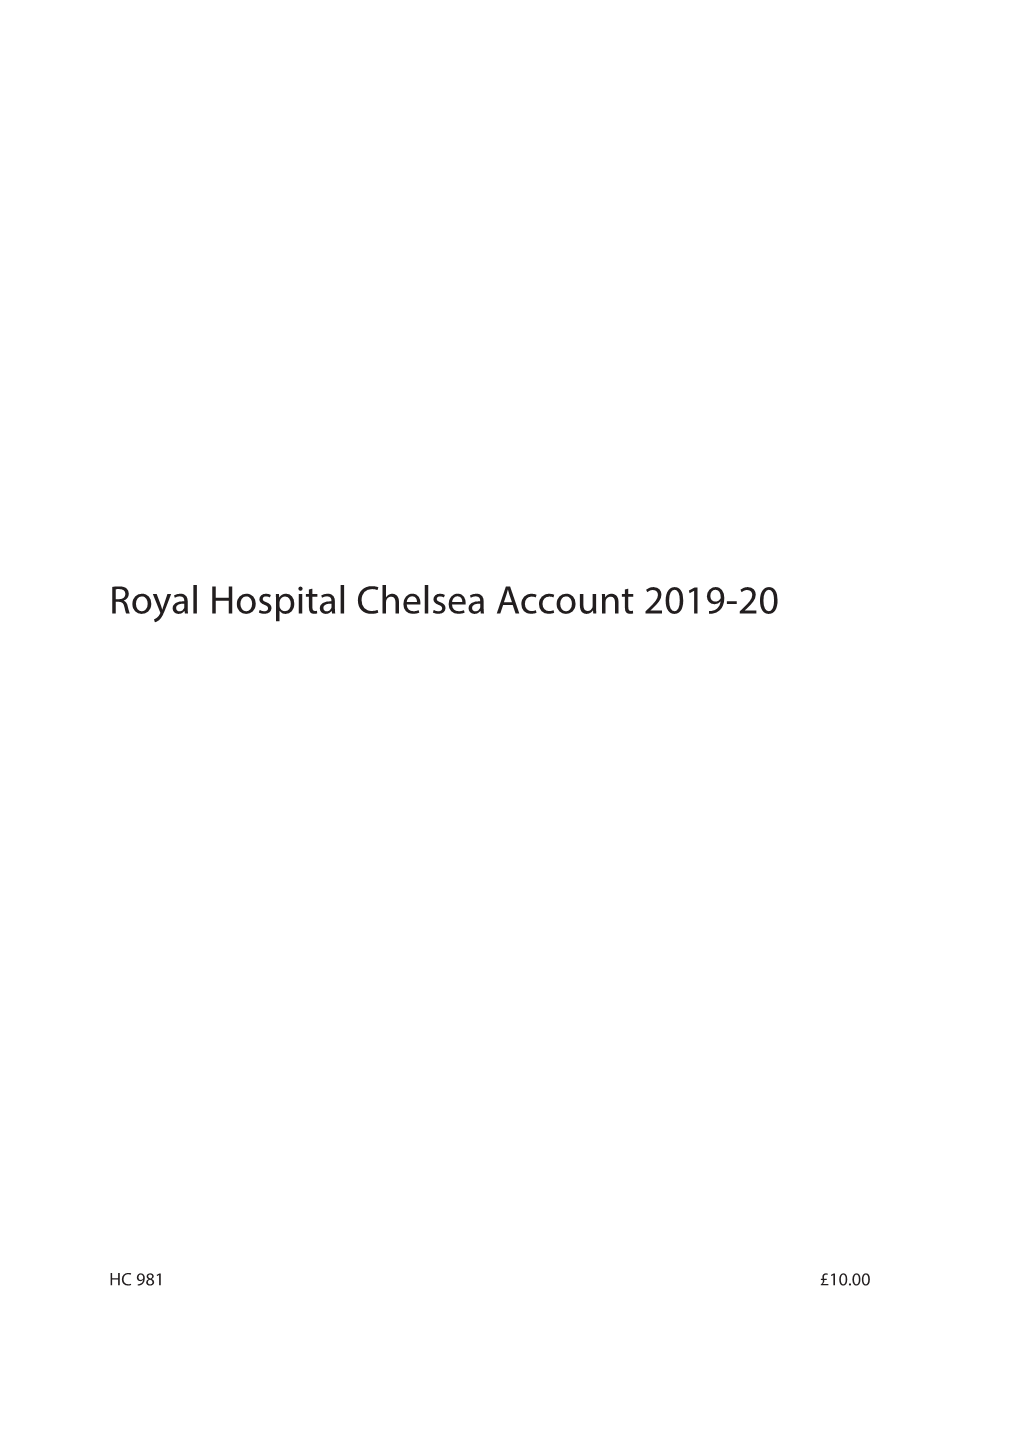 Royal Hospital Chelsea Annual Report 2020